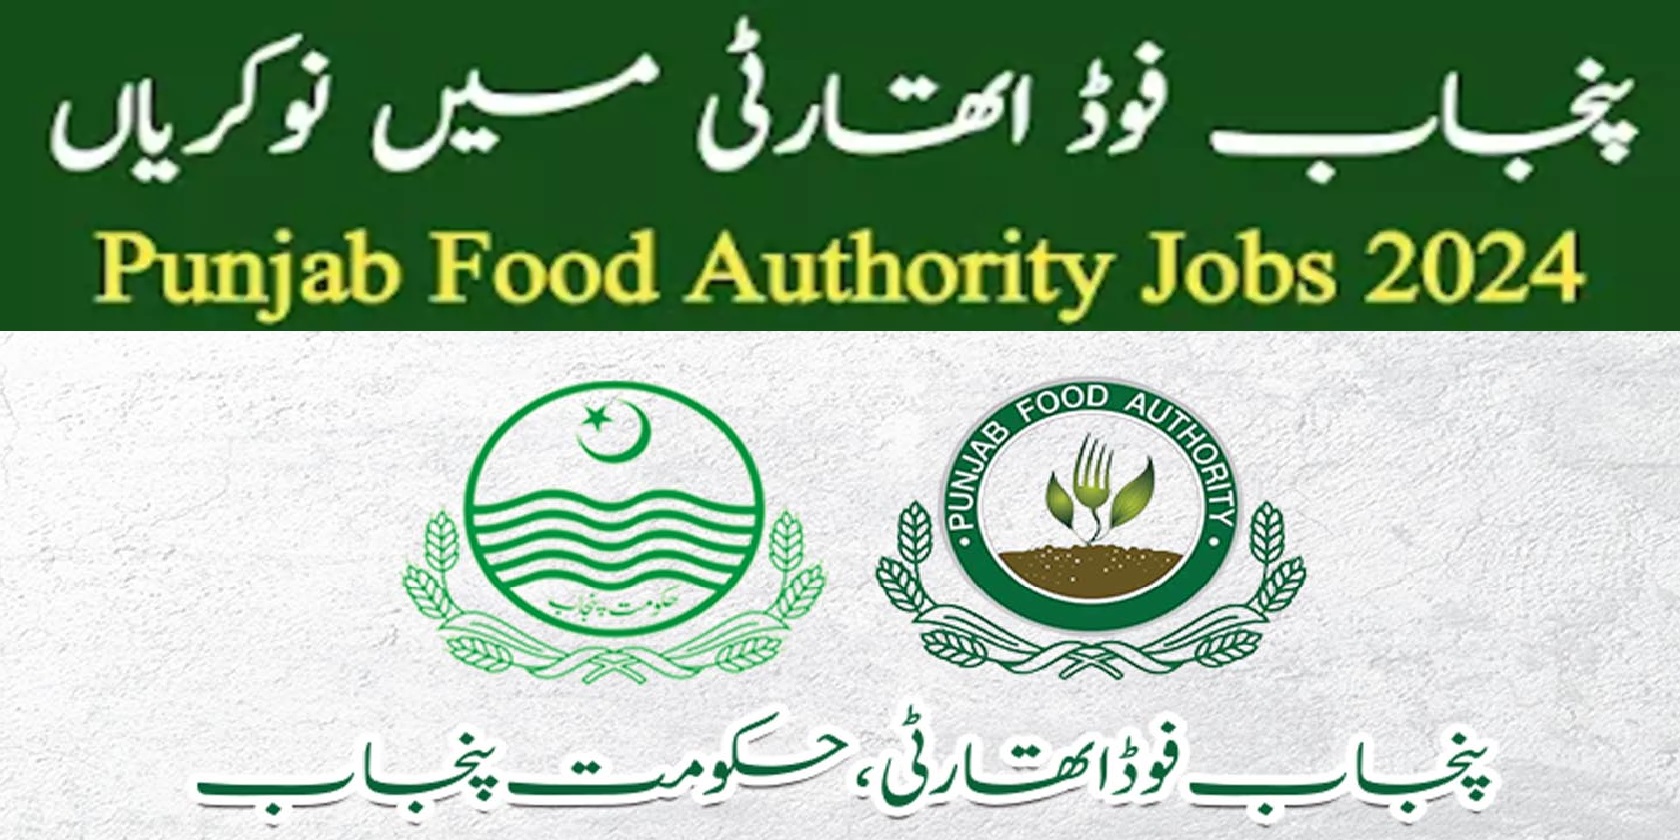 Punjab Food Authority Jobs 2024